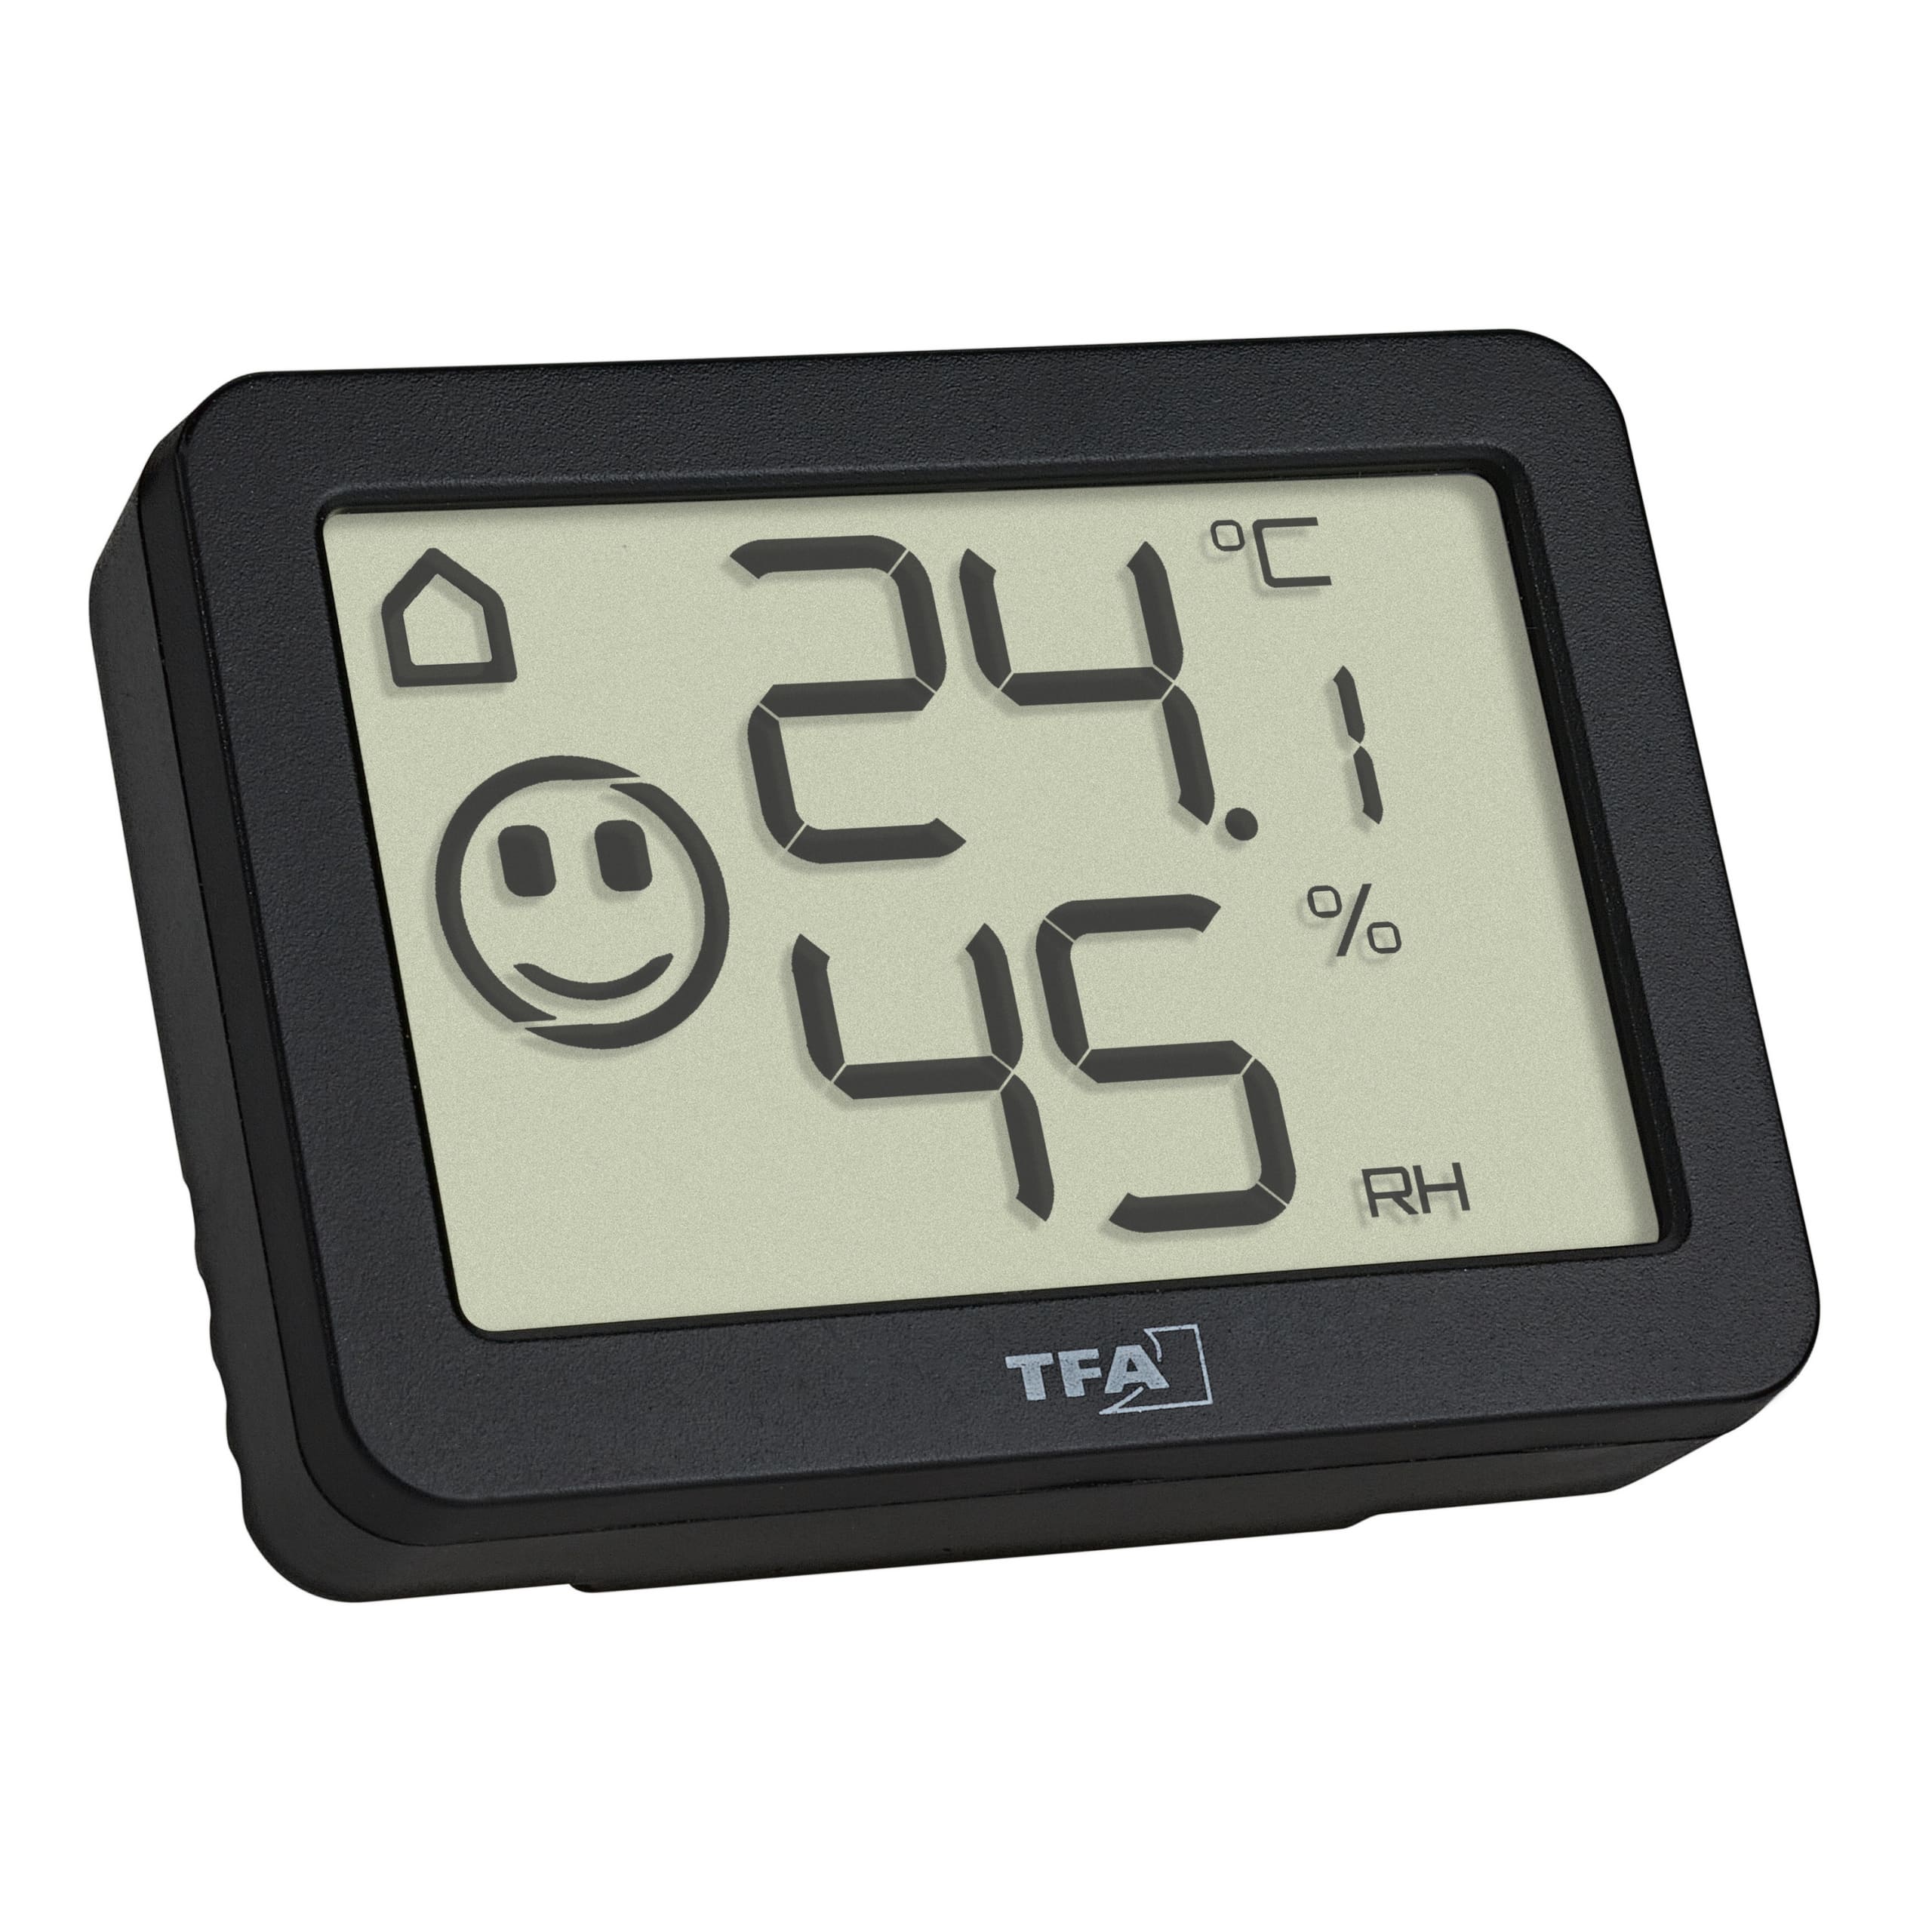 Digitale thermo-hygrometer, zwart